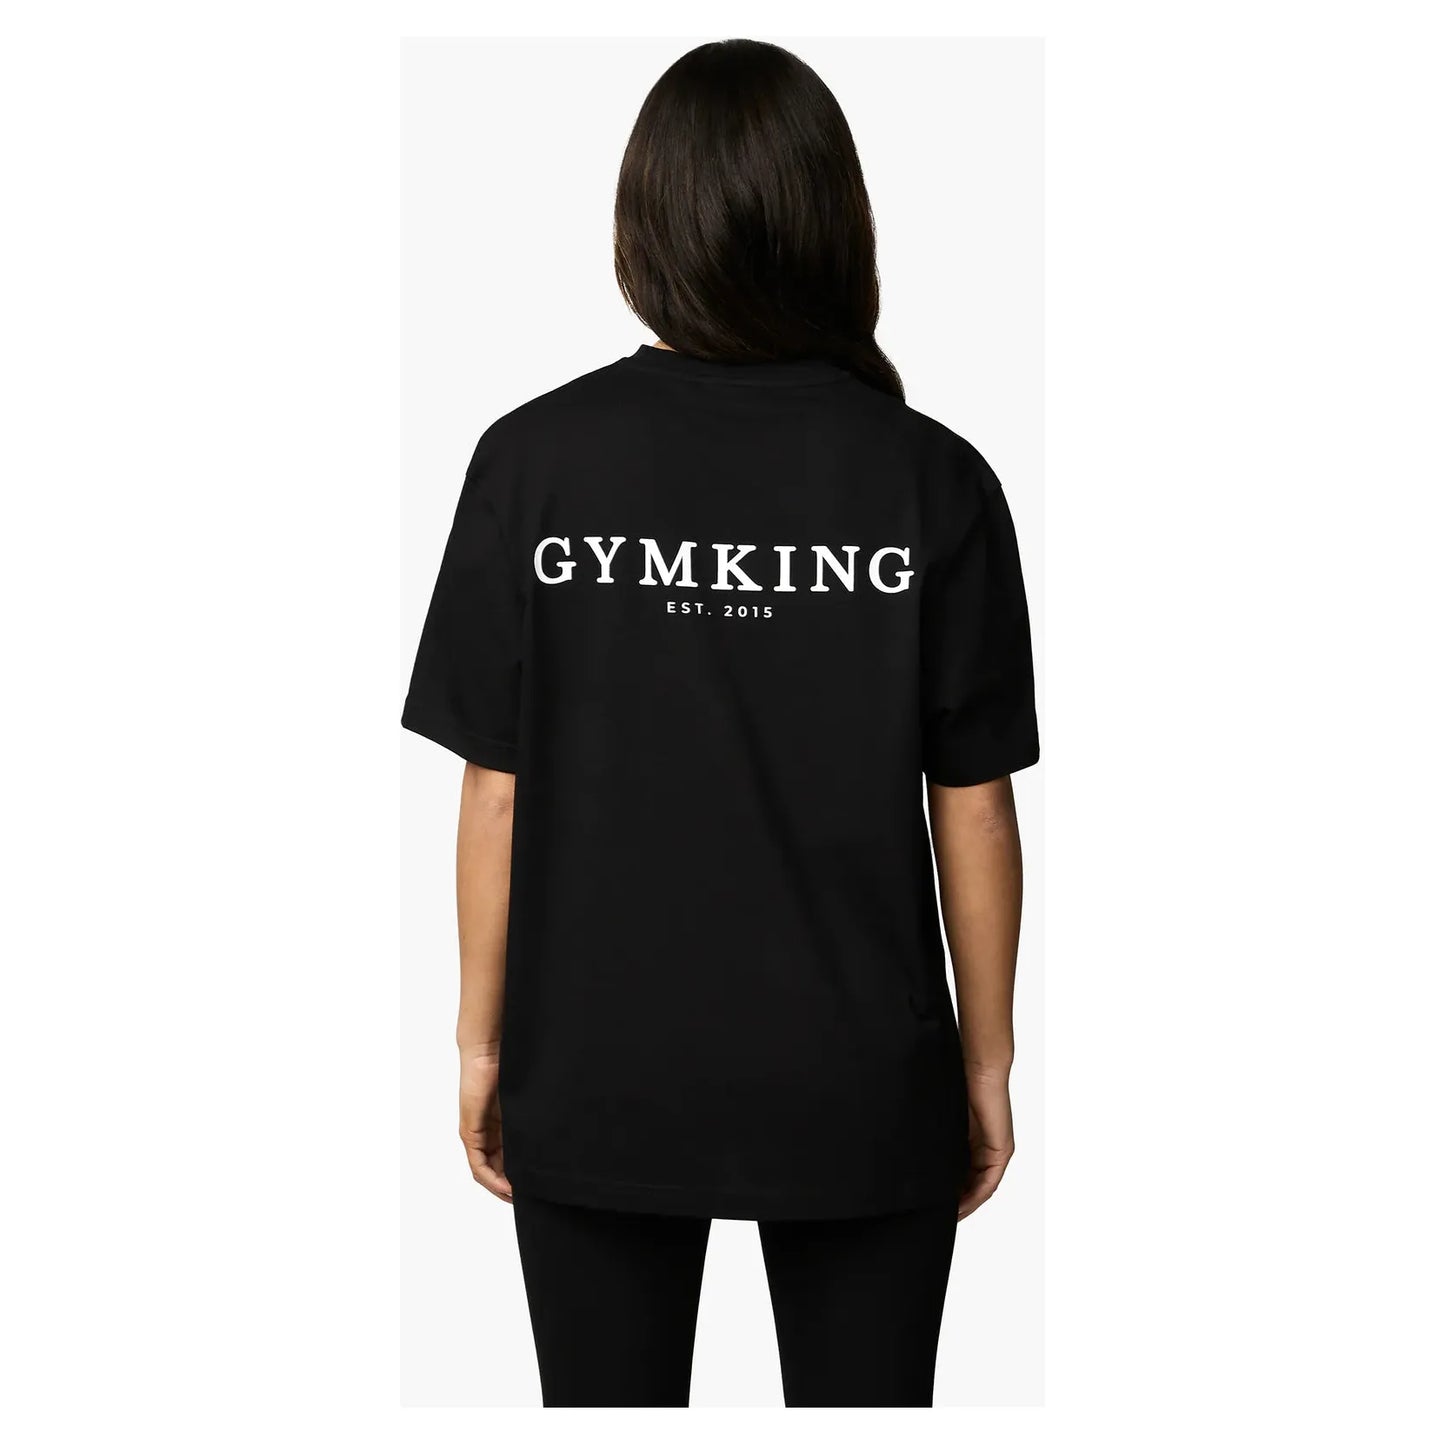 Gym King Established Boyfriend Tee - Black/White